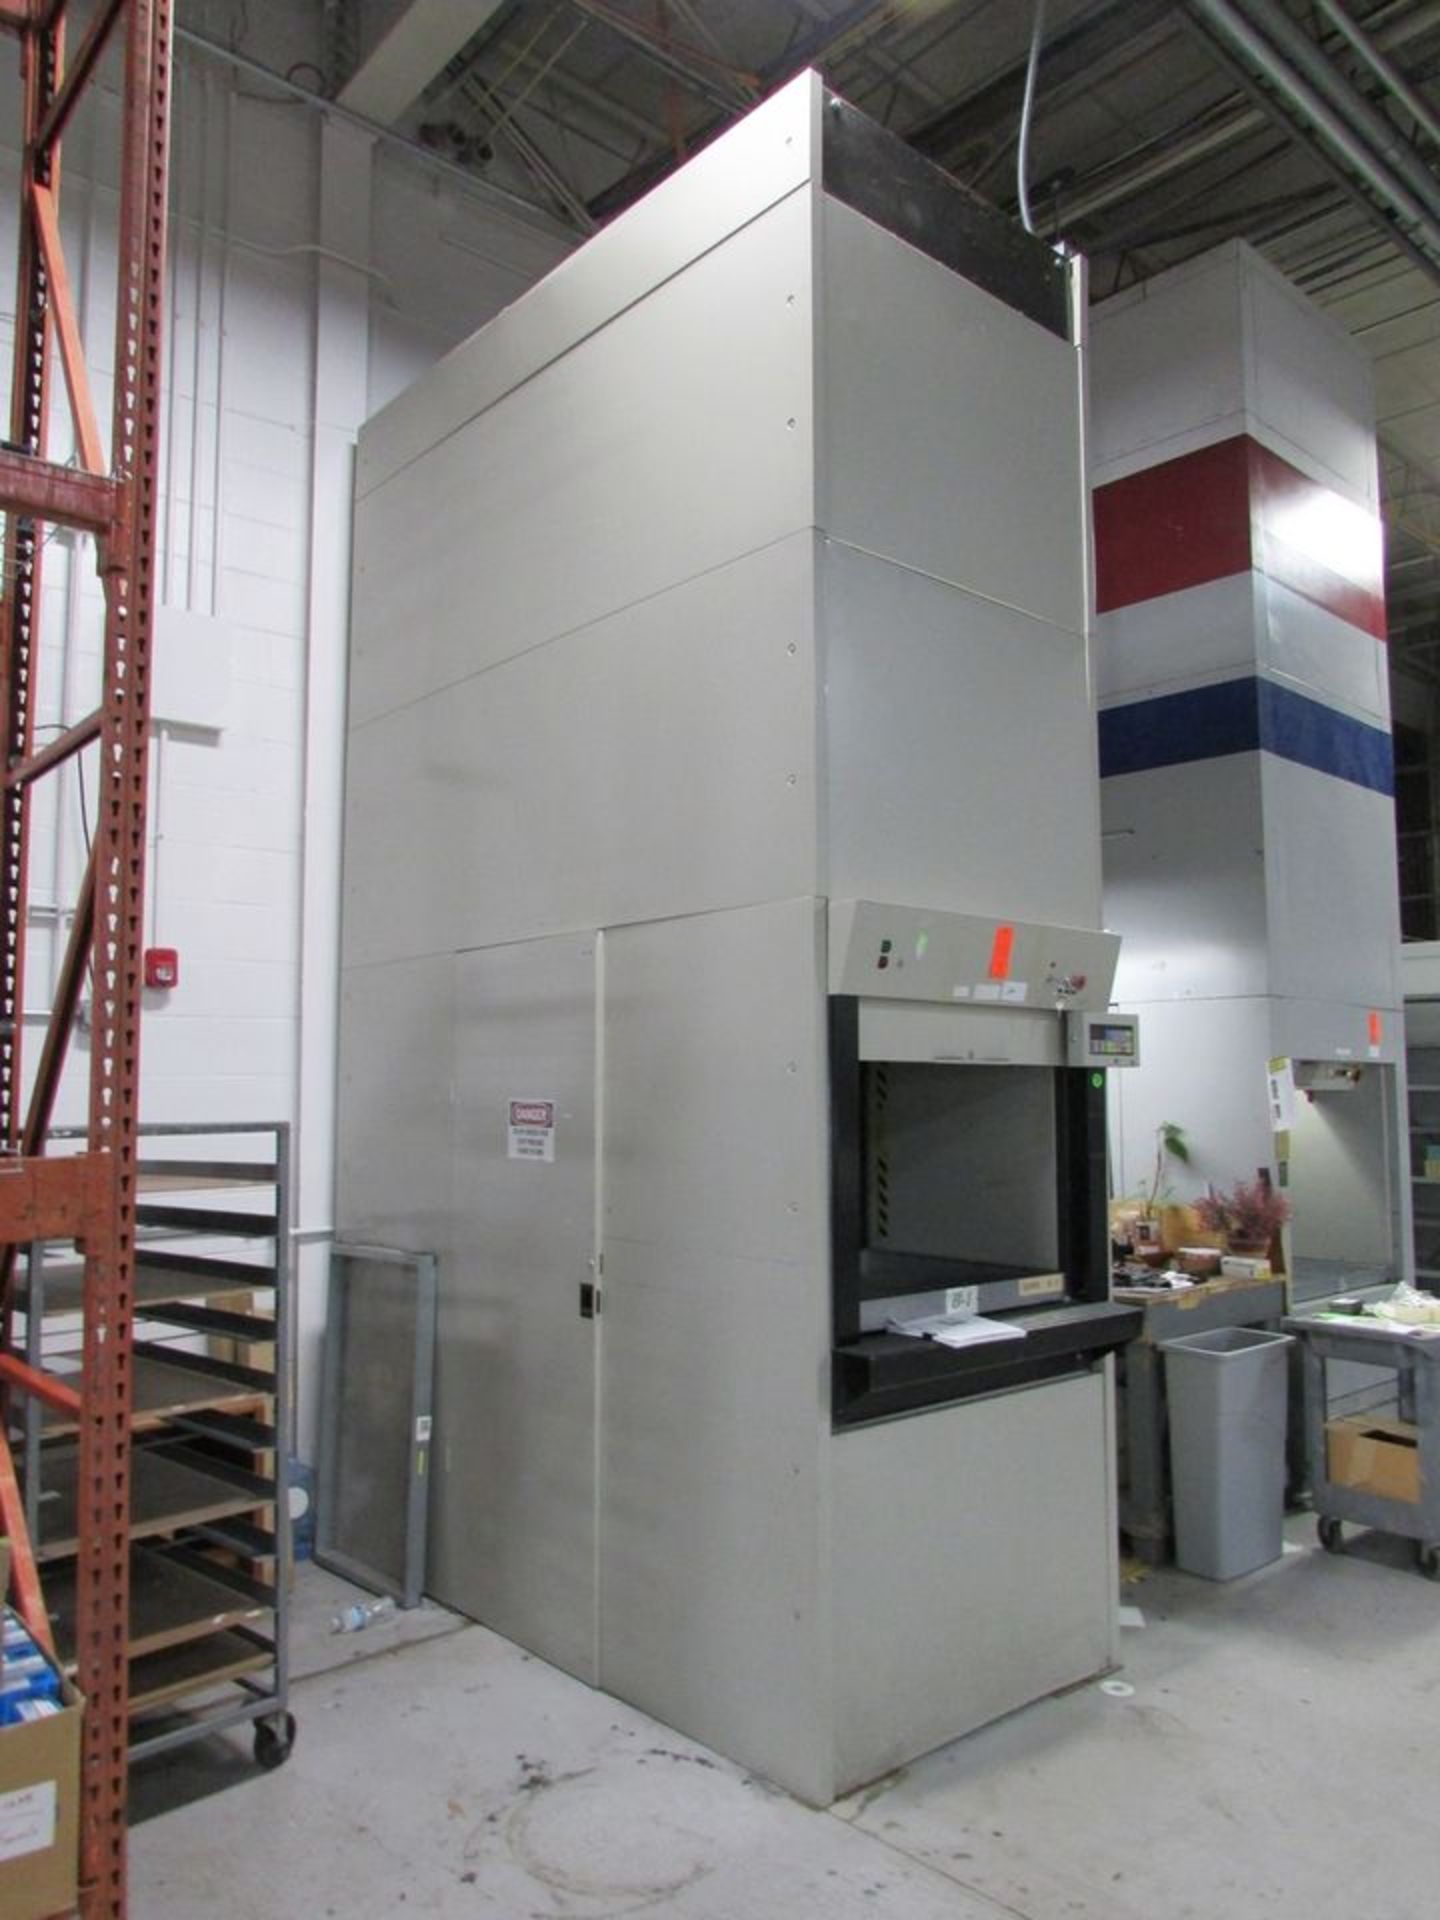 Remstar High Density Automated Storage & Retrieval System, 30" x 36" Trays, 10' High